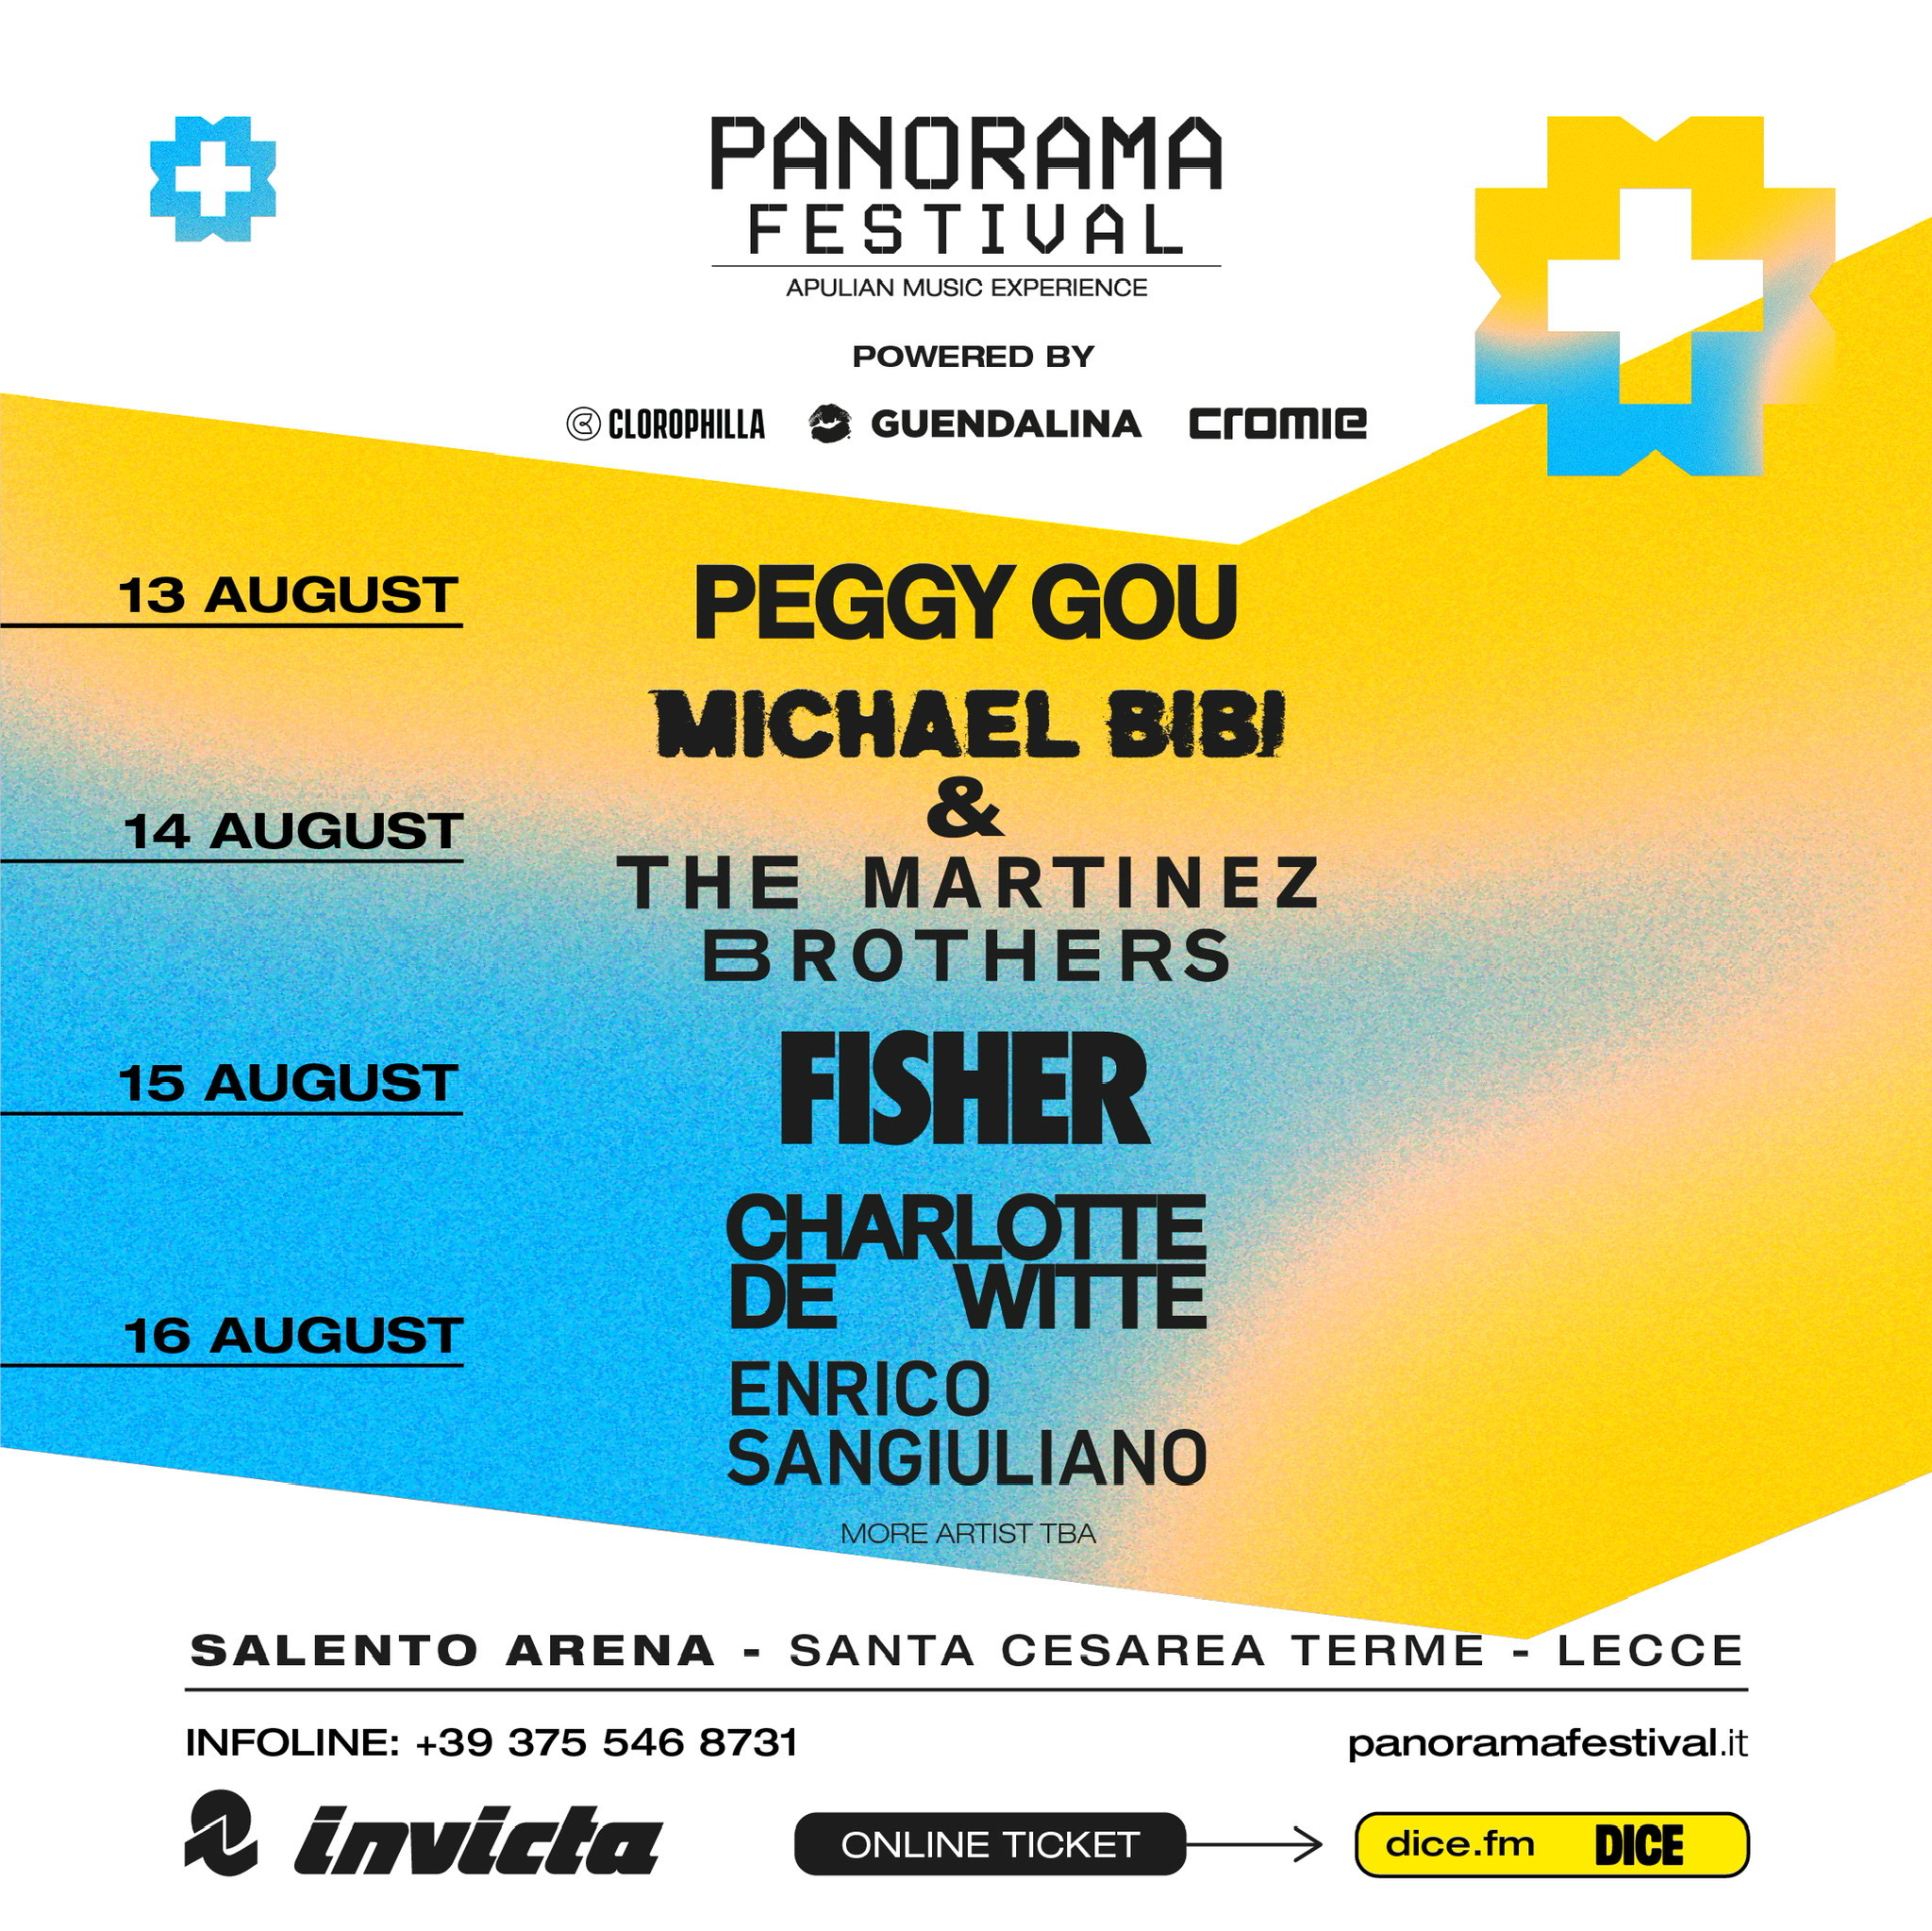 Panorama Festival, l'elettronica arriva in Salento NoiseCloud